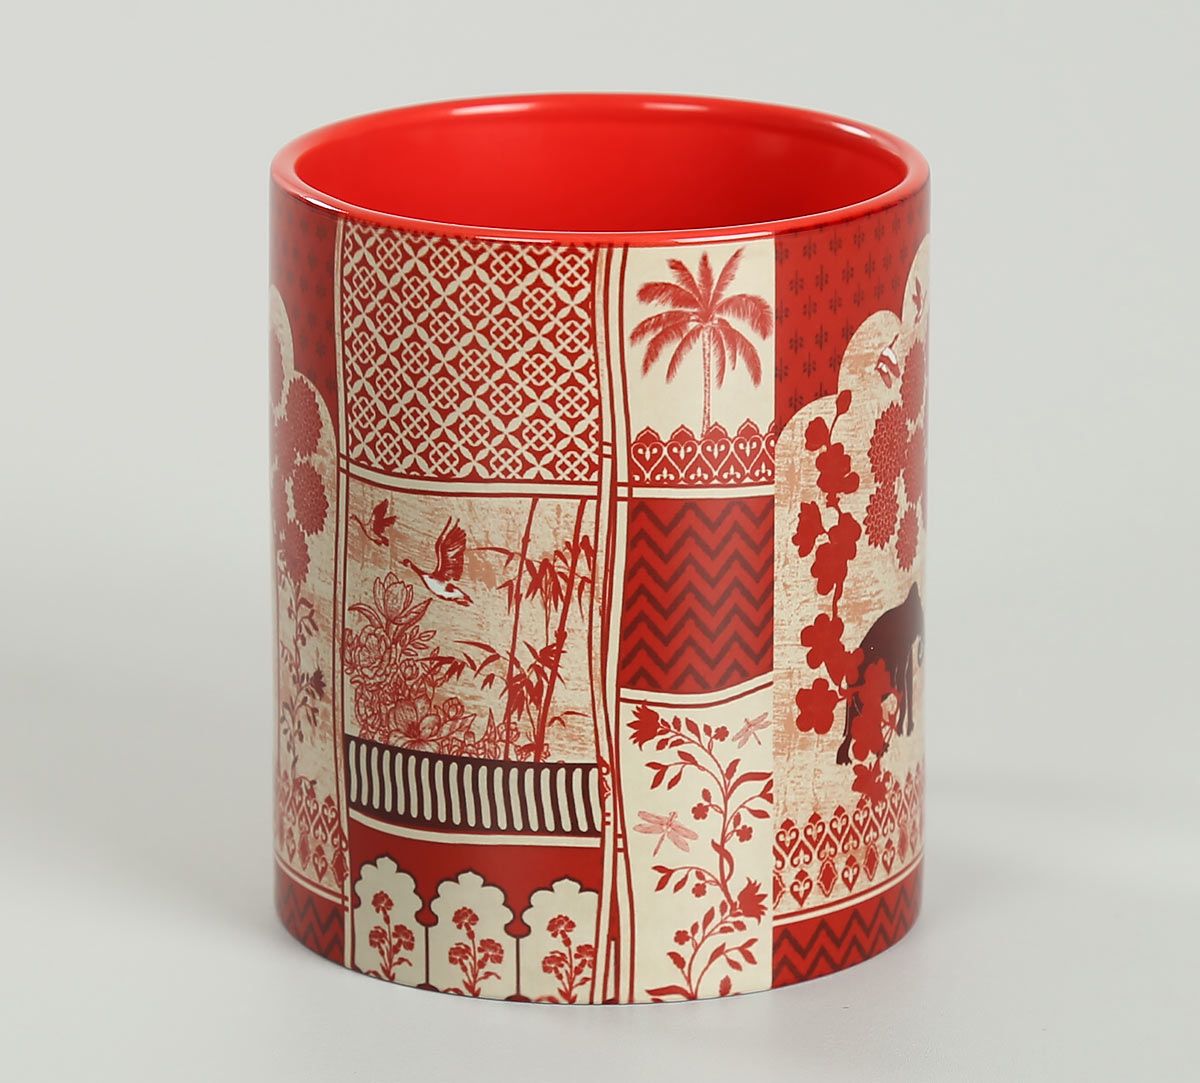 Range of Designs on Coffee Mugs Online at Best Price